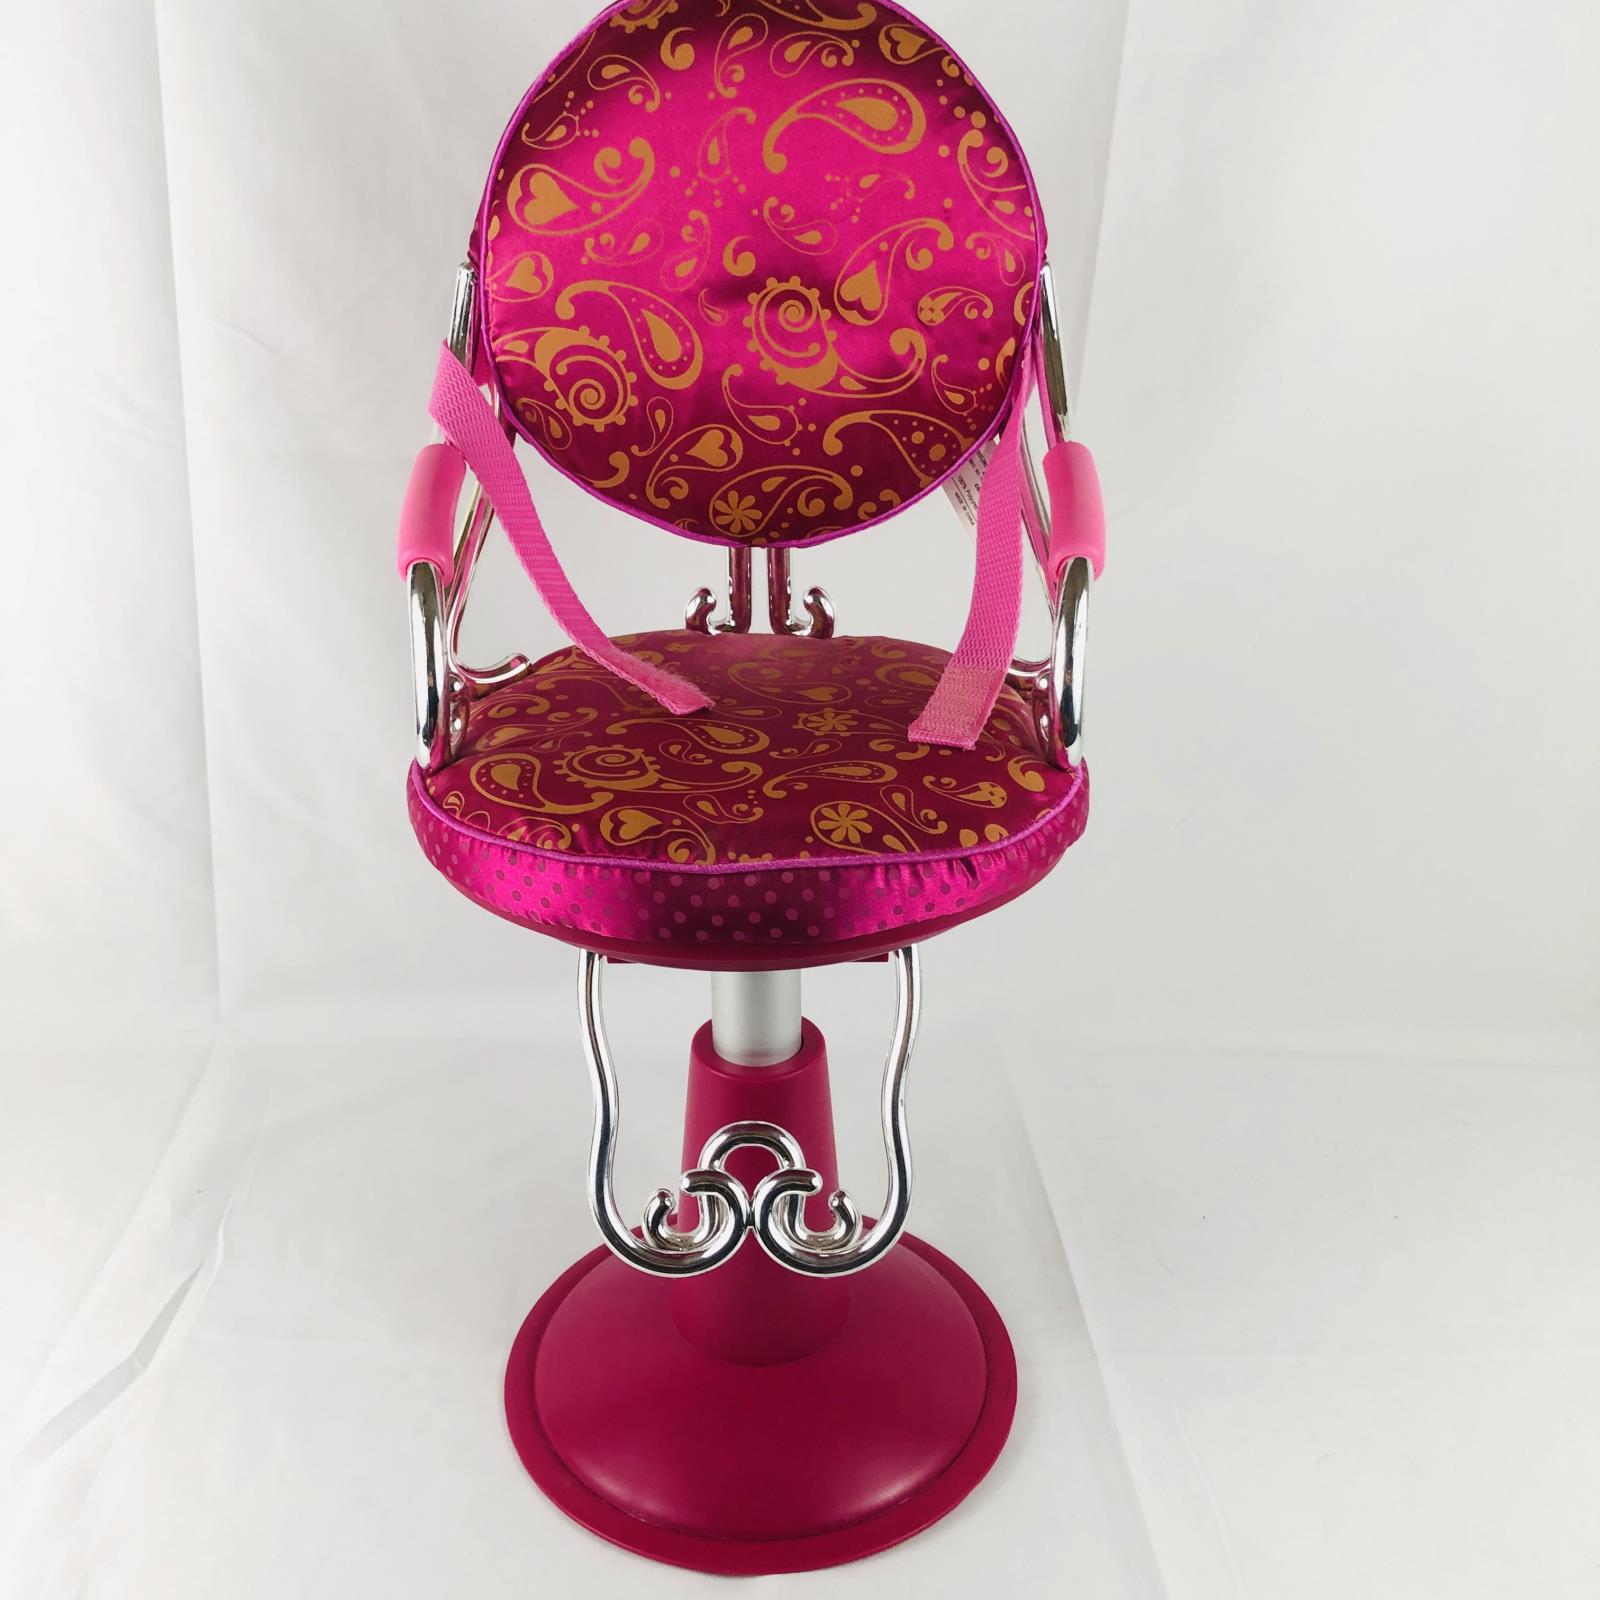 Our Generation Battat 17 Inch Salon Chair Dark Pink Fits American Girl